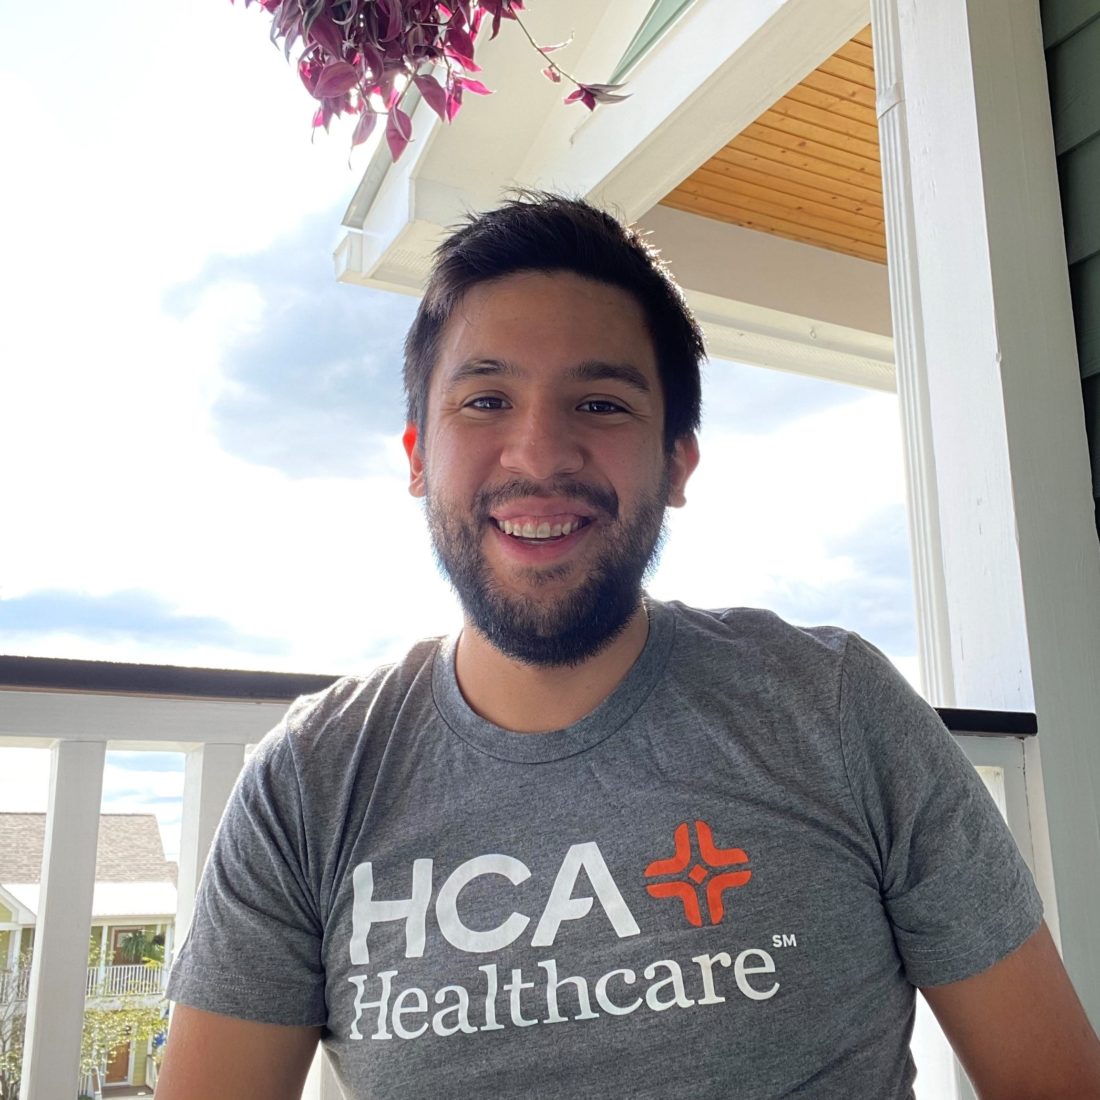 Man wearing HCA Healthcare t-shirt